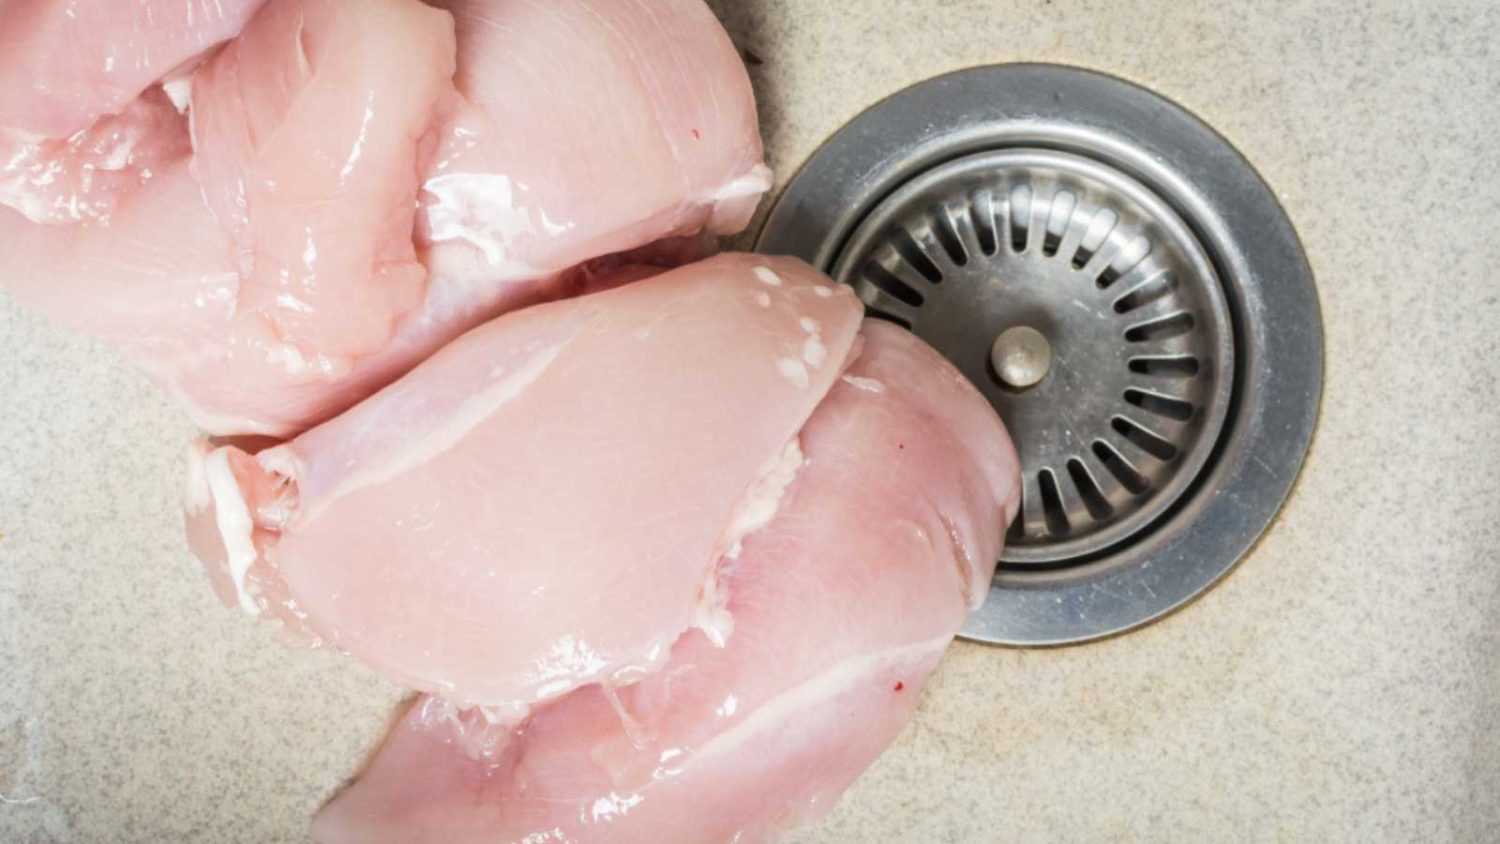 Thawing chicken in sink